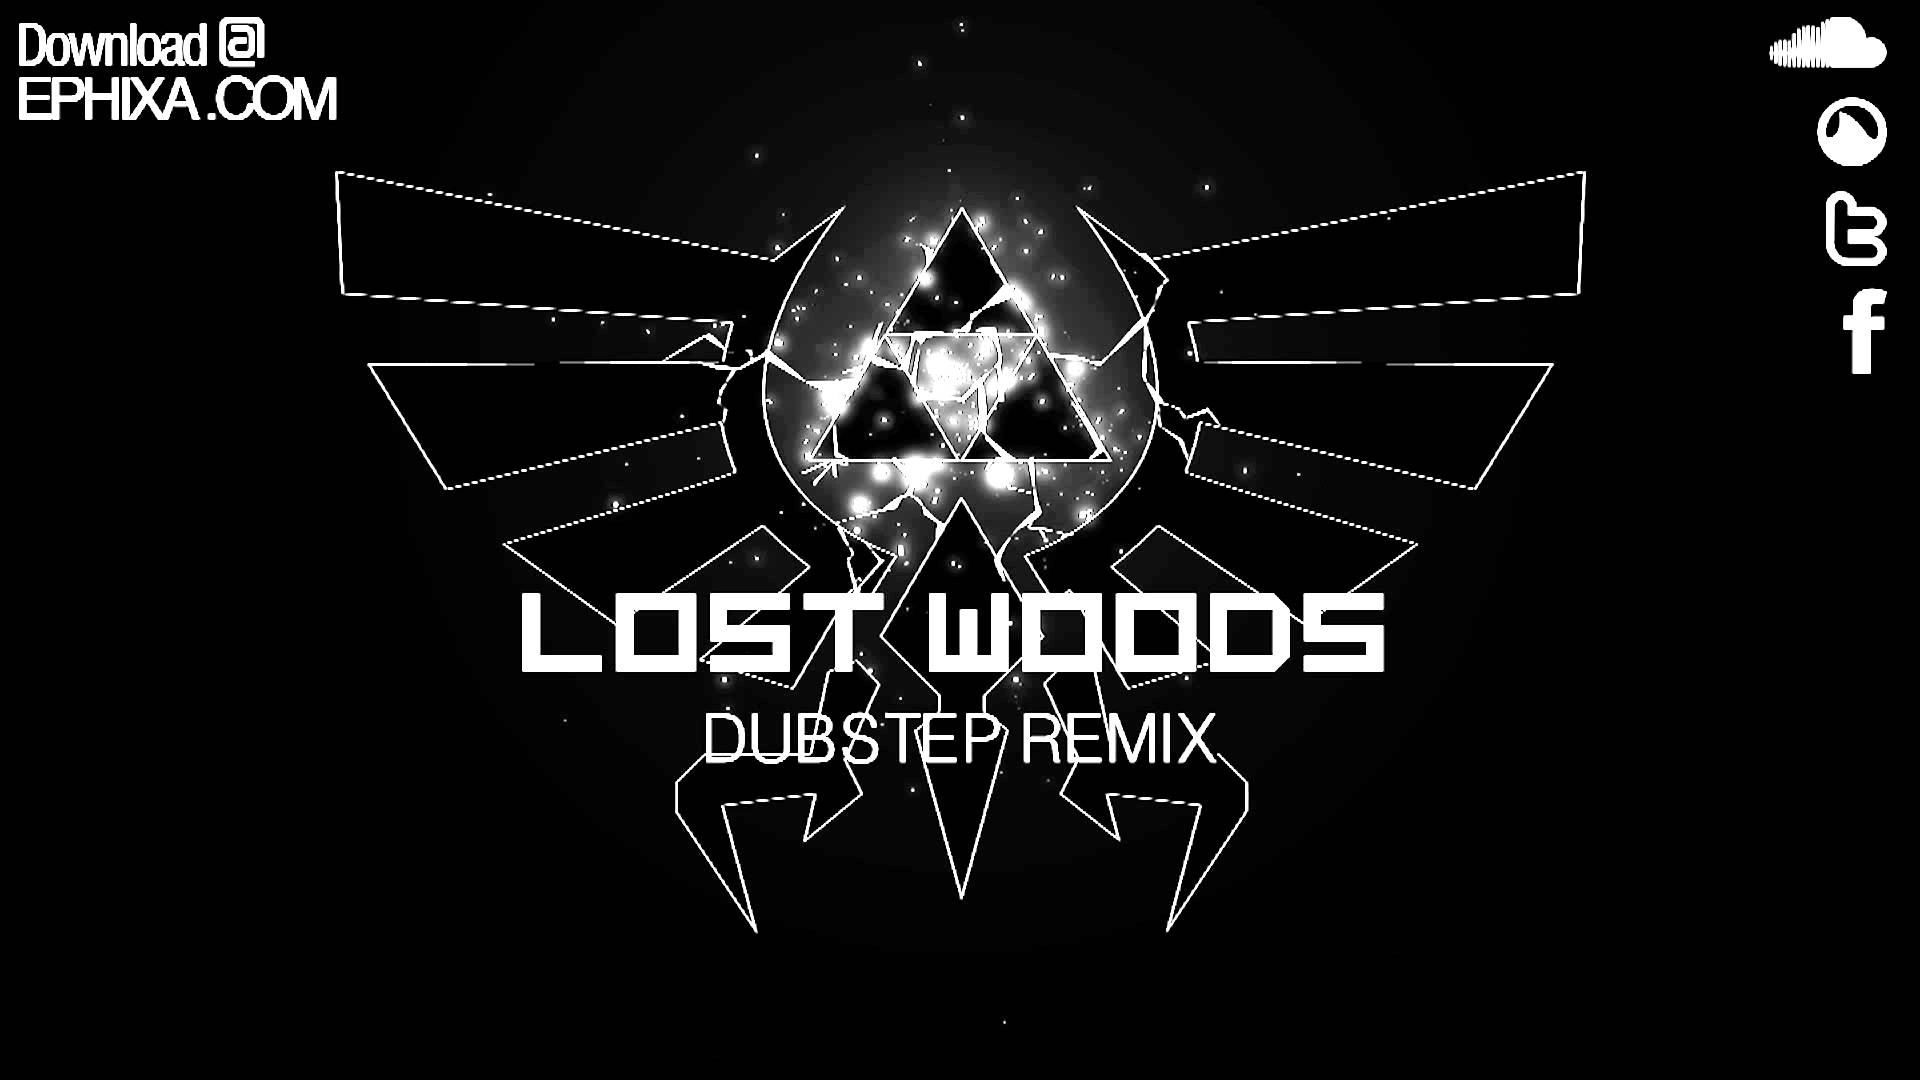 Lost Woods Dubstep Remix - Ephixa (Download at   Zelda Step)